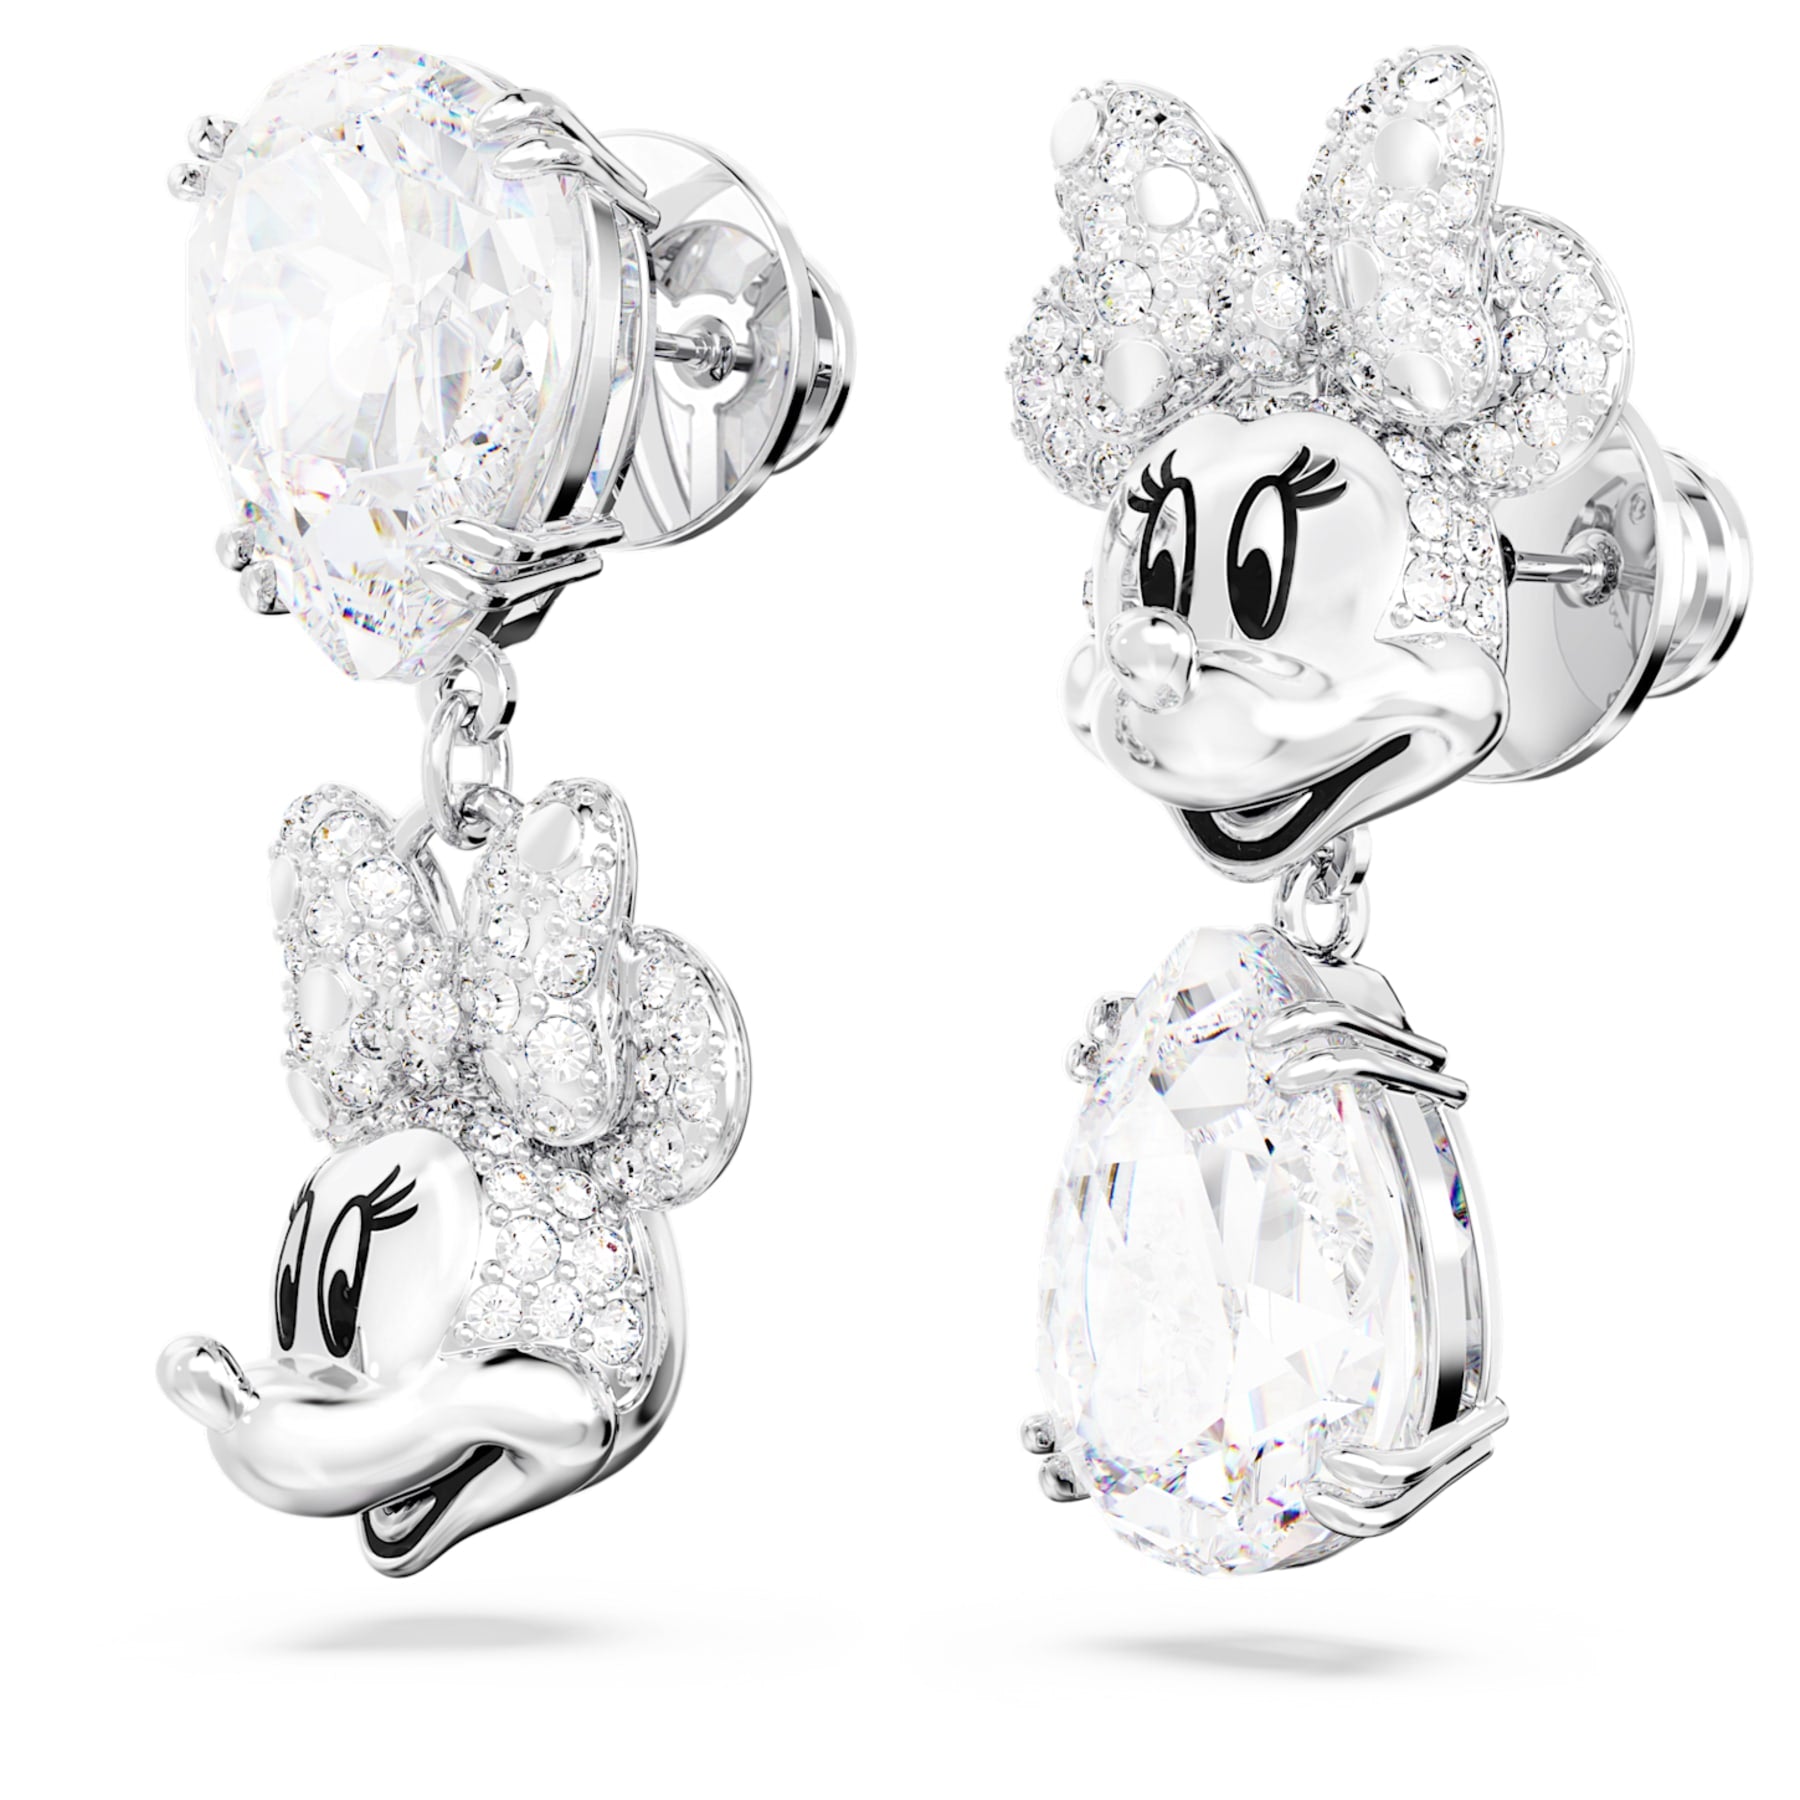 Disney - Minnie Mouse - Earrings - Swarovski